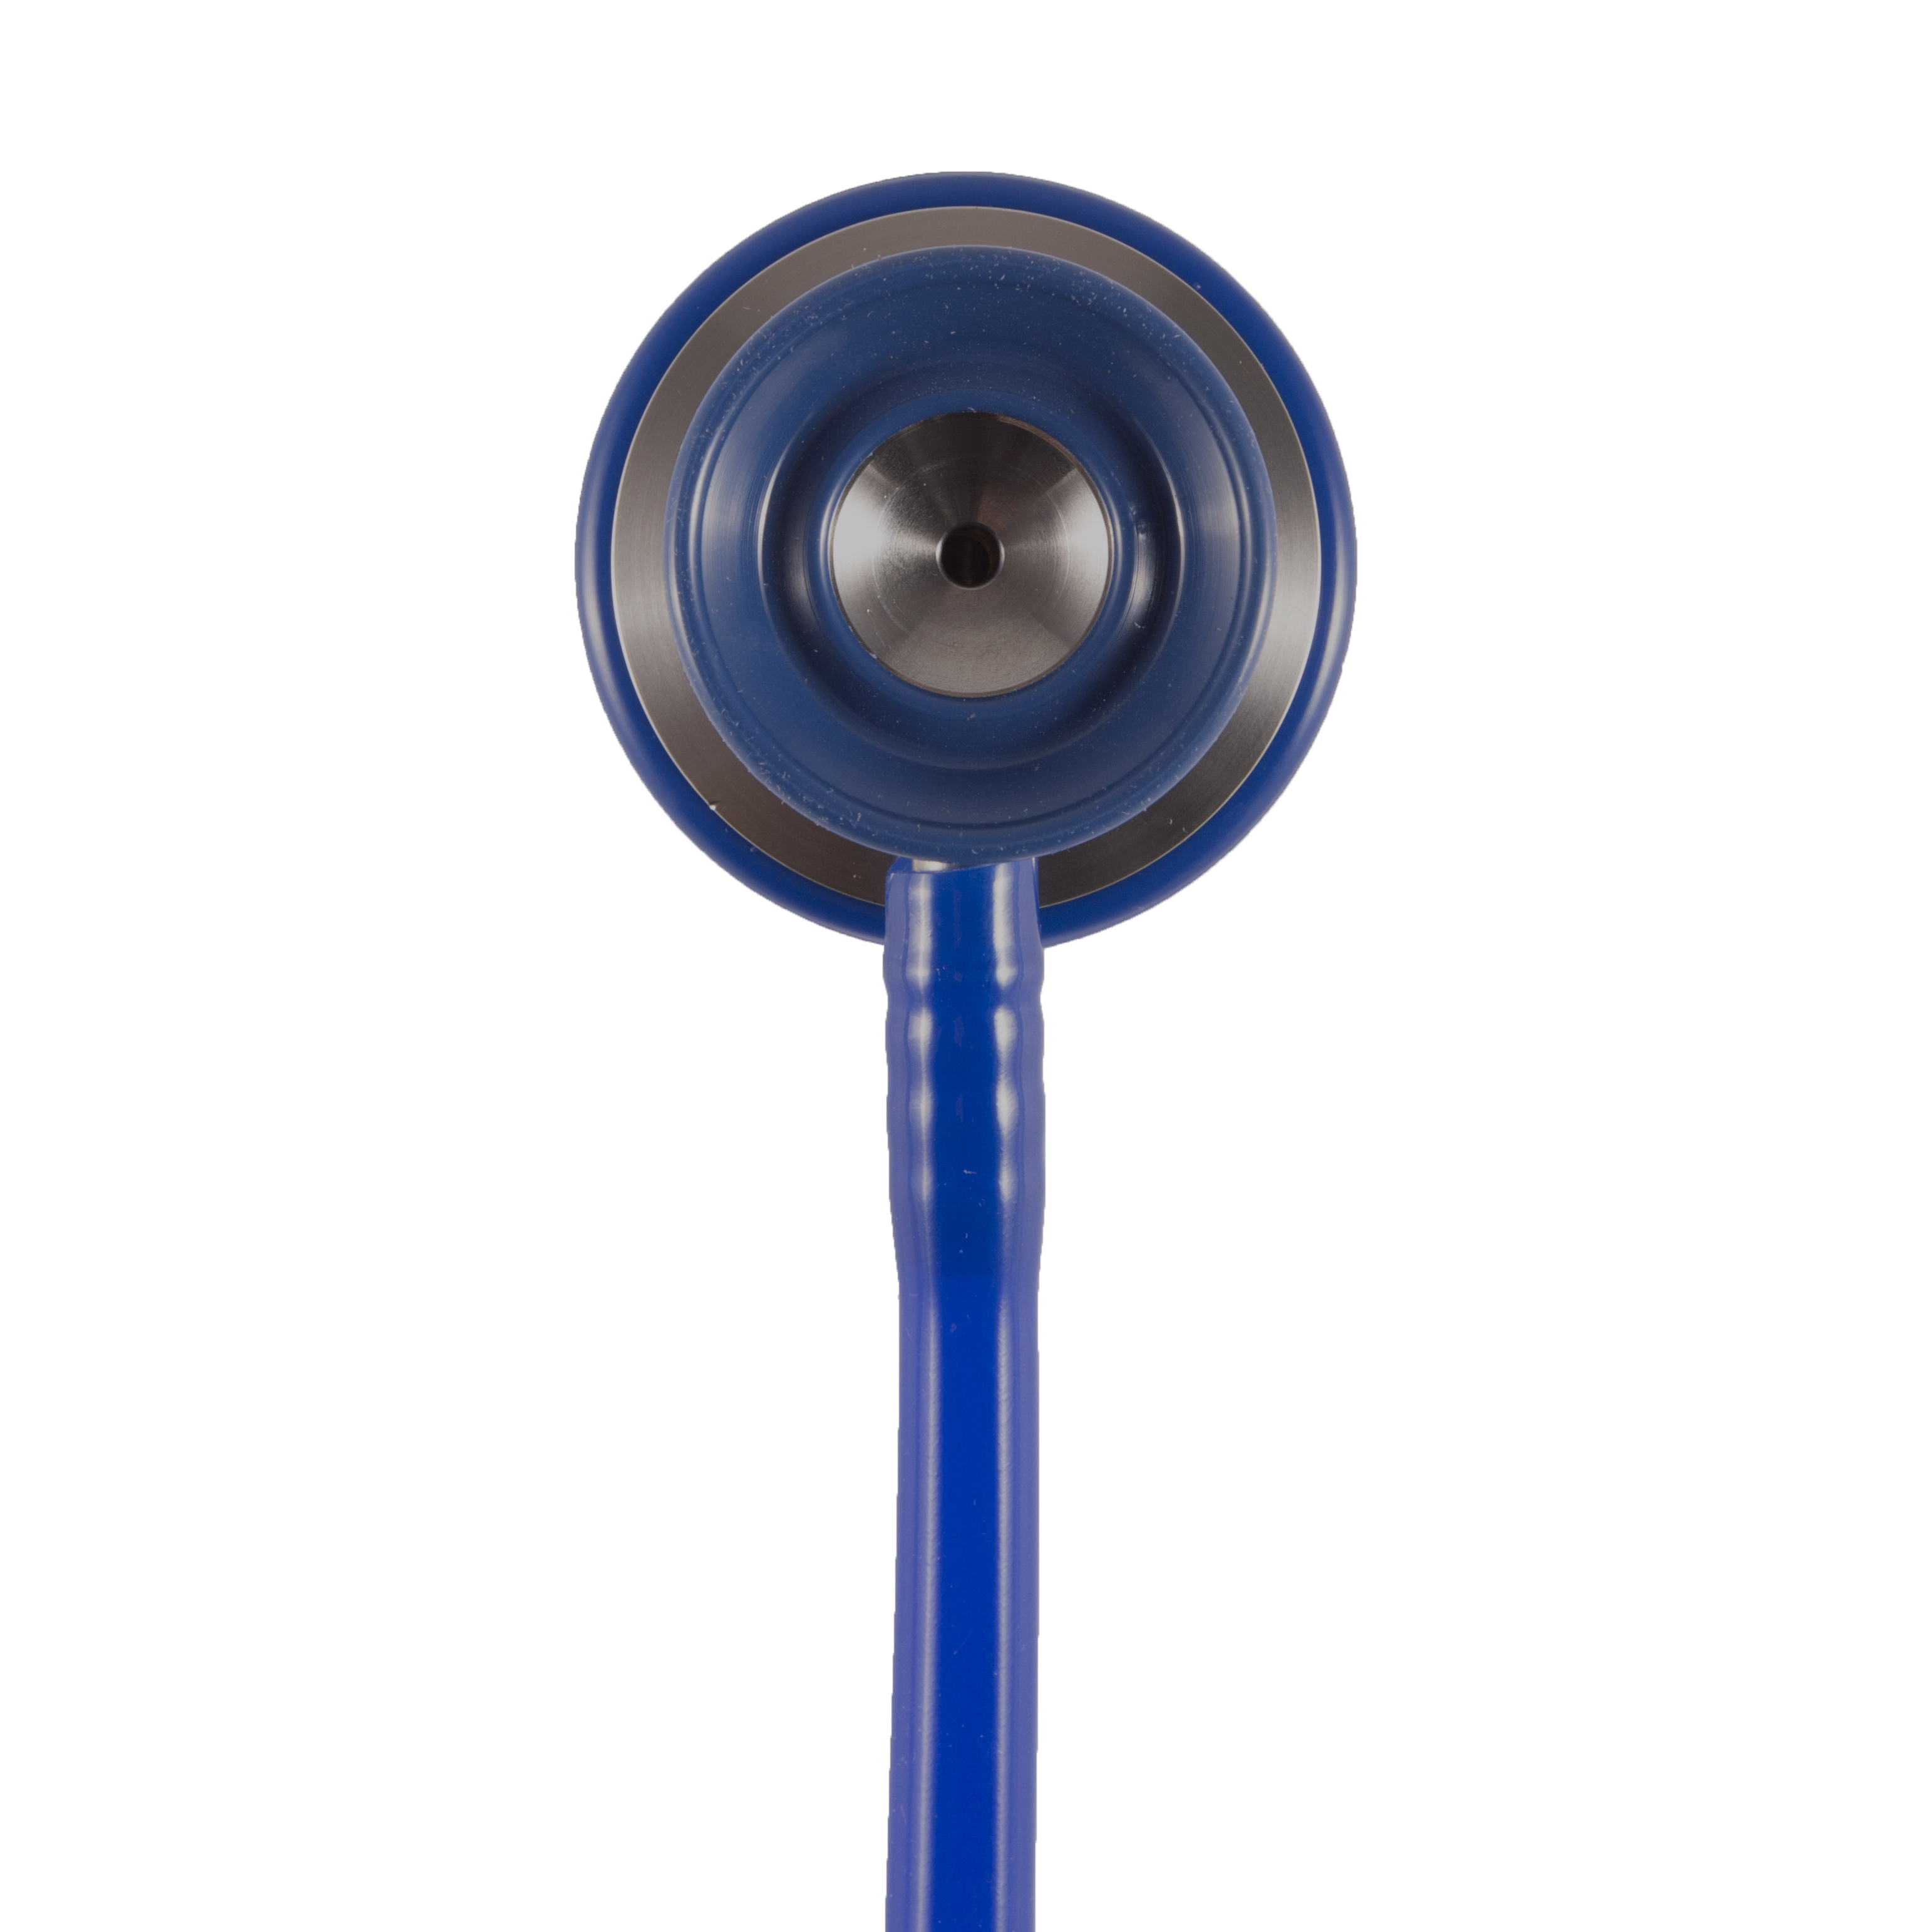 Zellamed Kosmolit 45mm Stethoscope